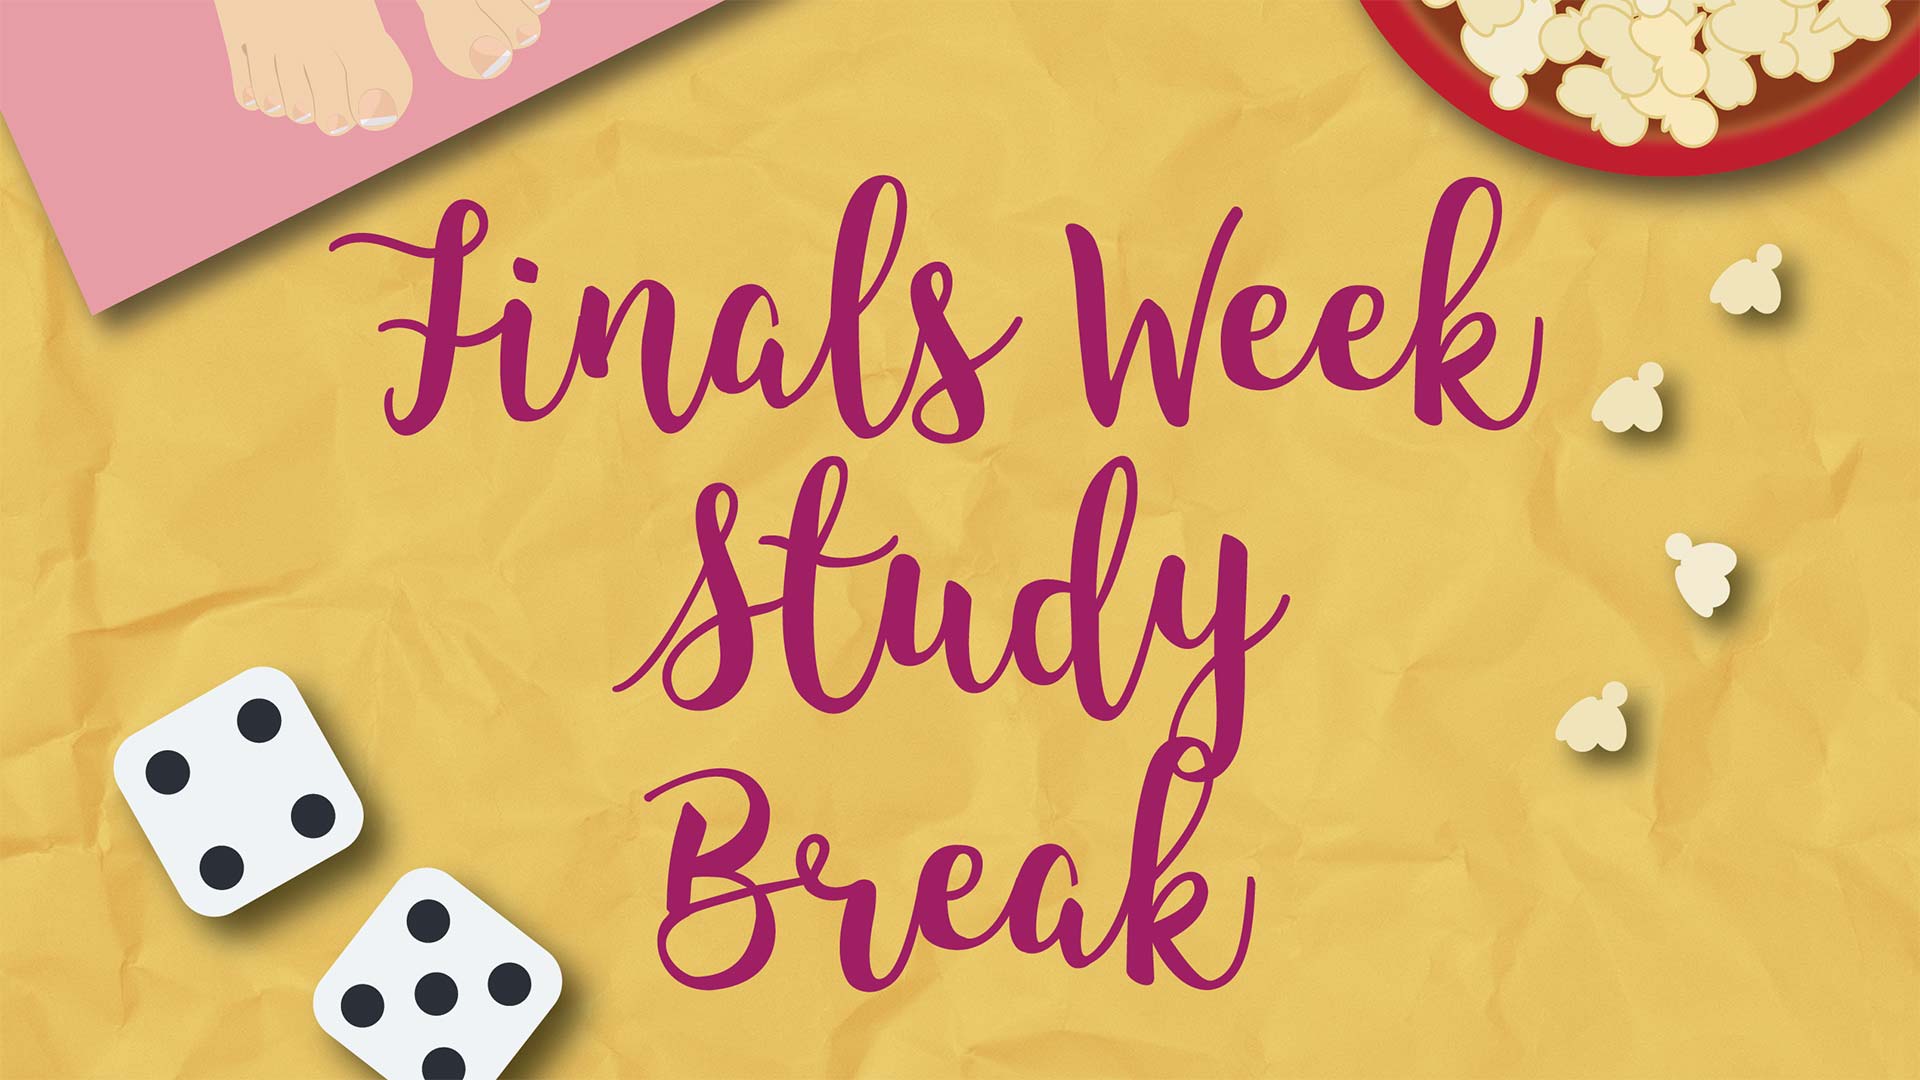 Finals Week Study Break design with feet, popcorn, and dice